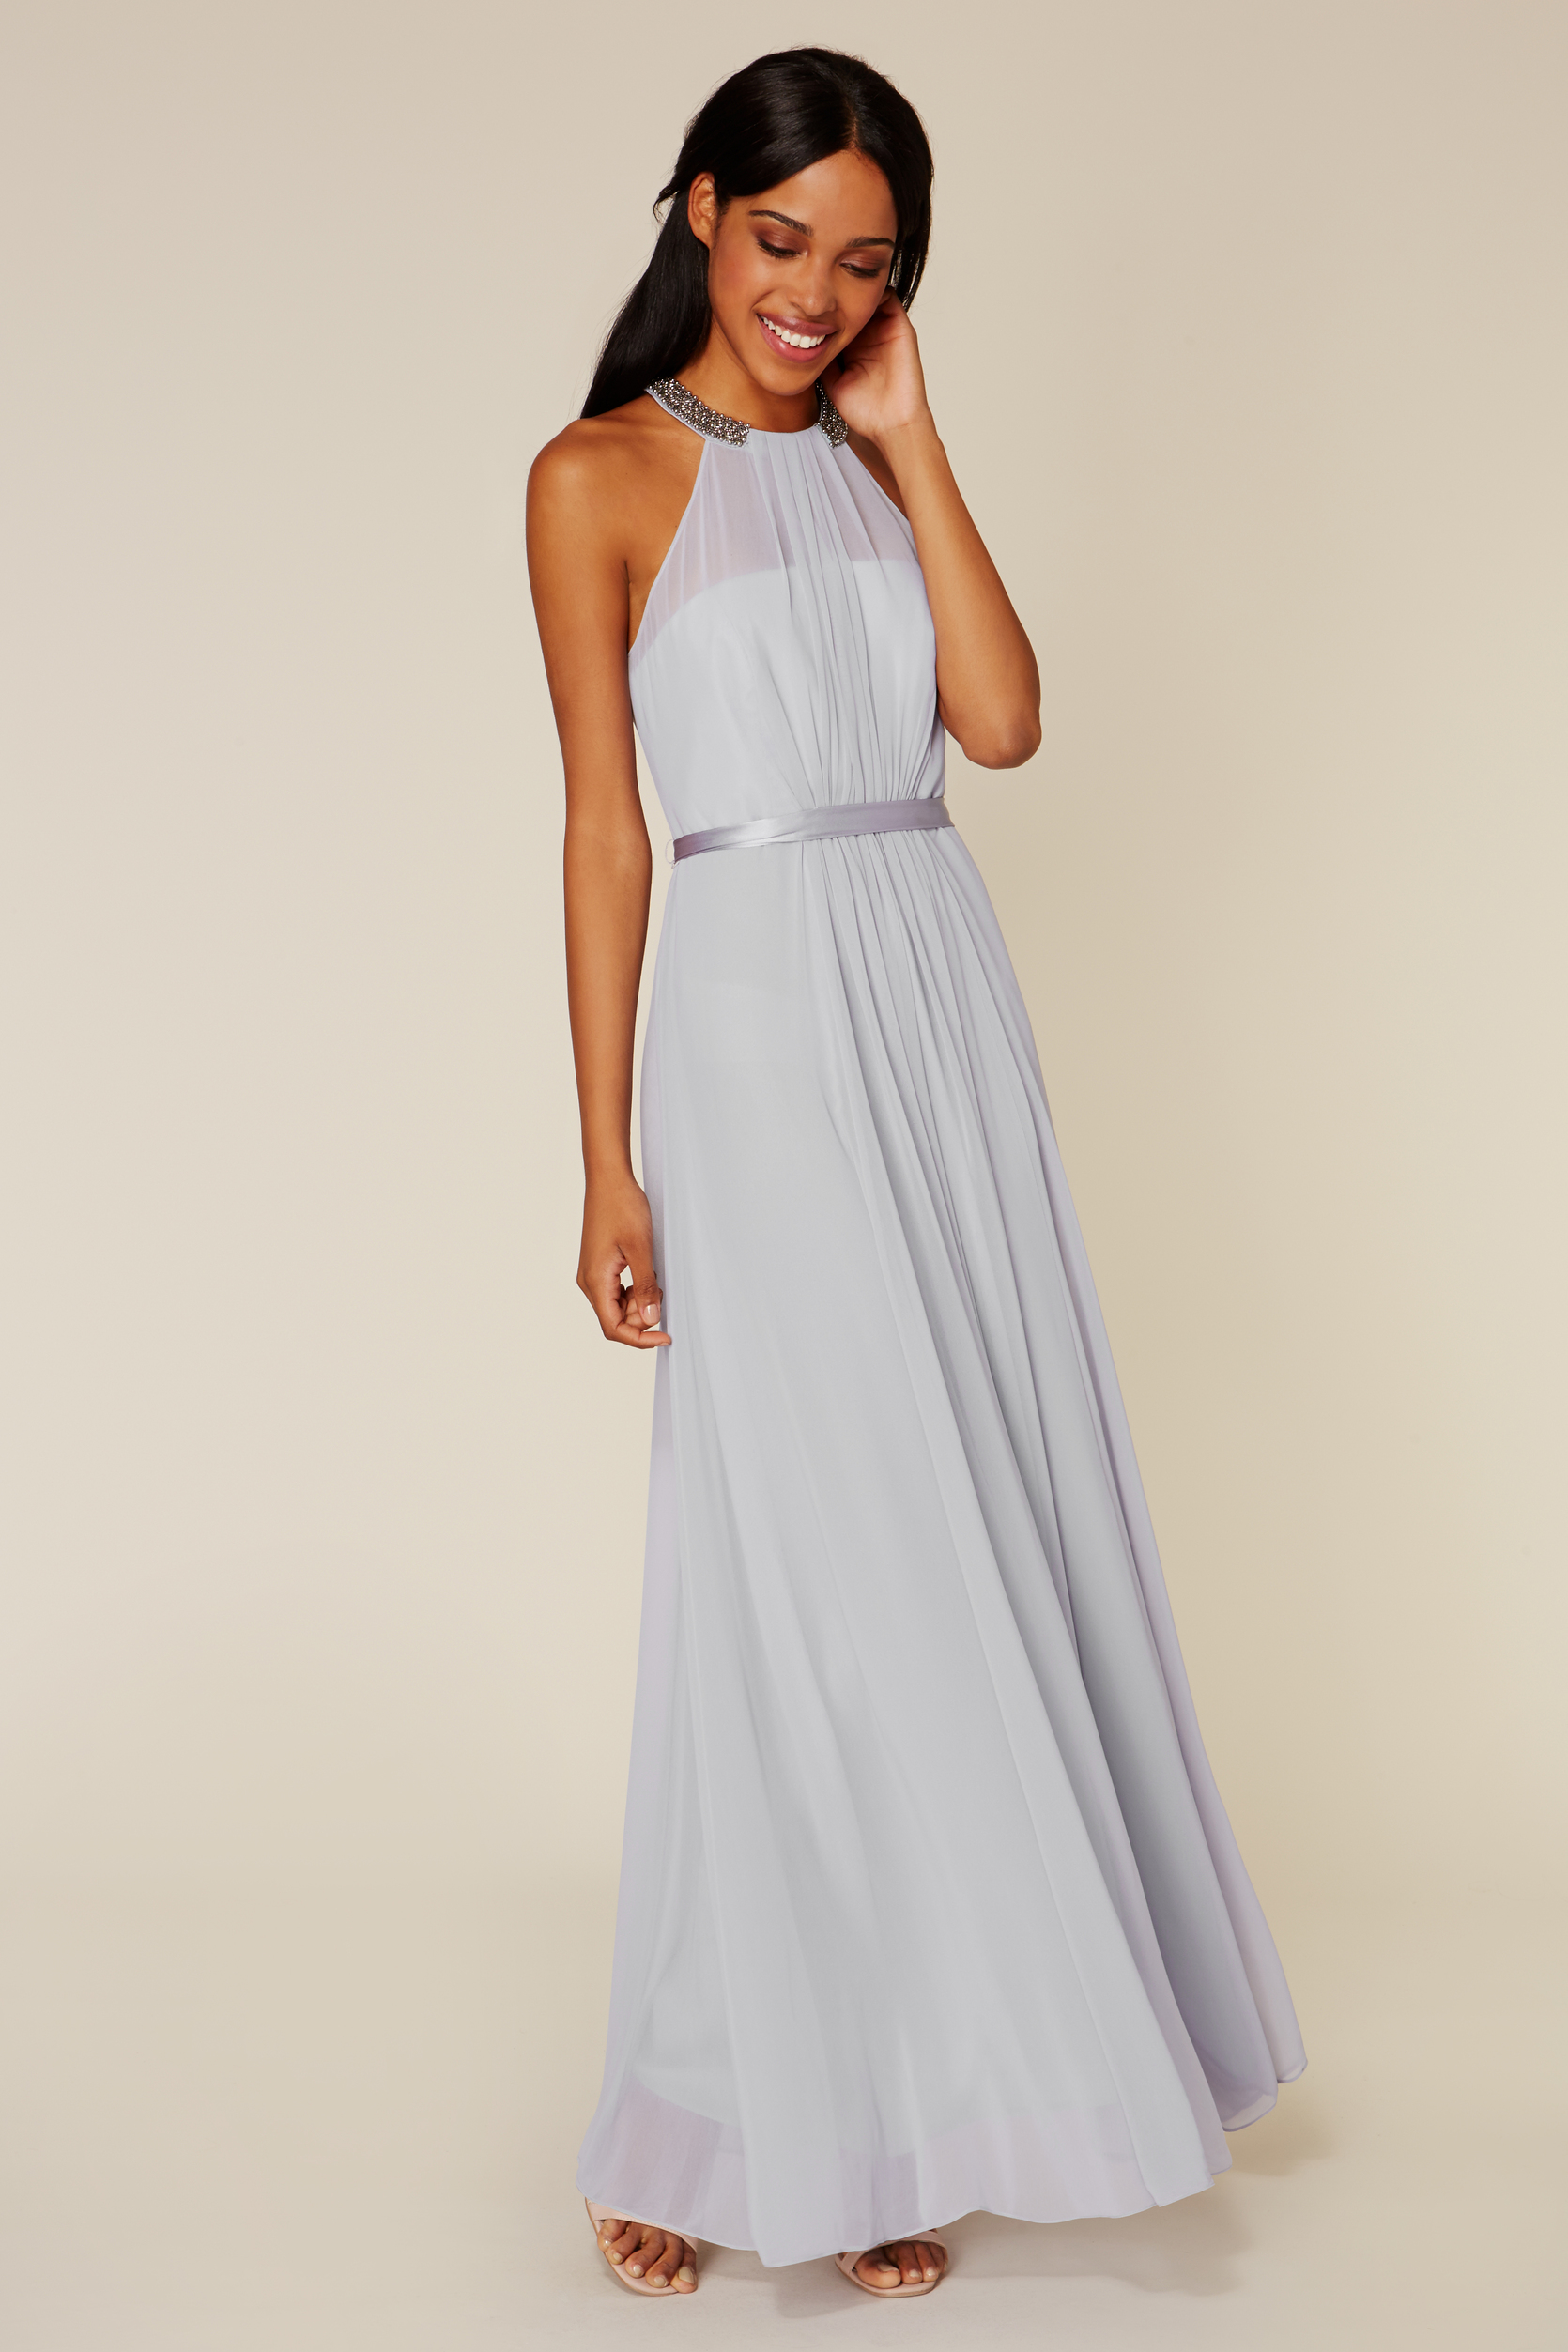 Bridesmaid Dresses For Every Body Shape - WeddingPlanner.co.uk